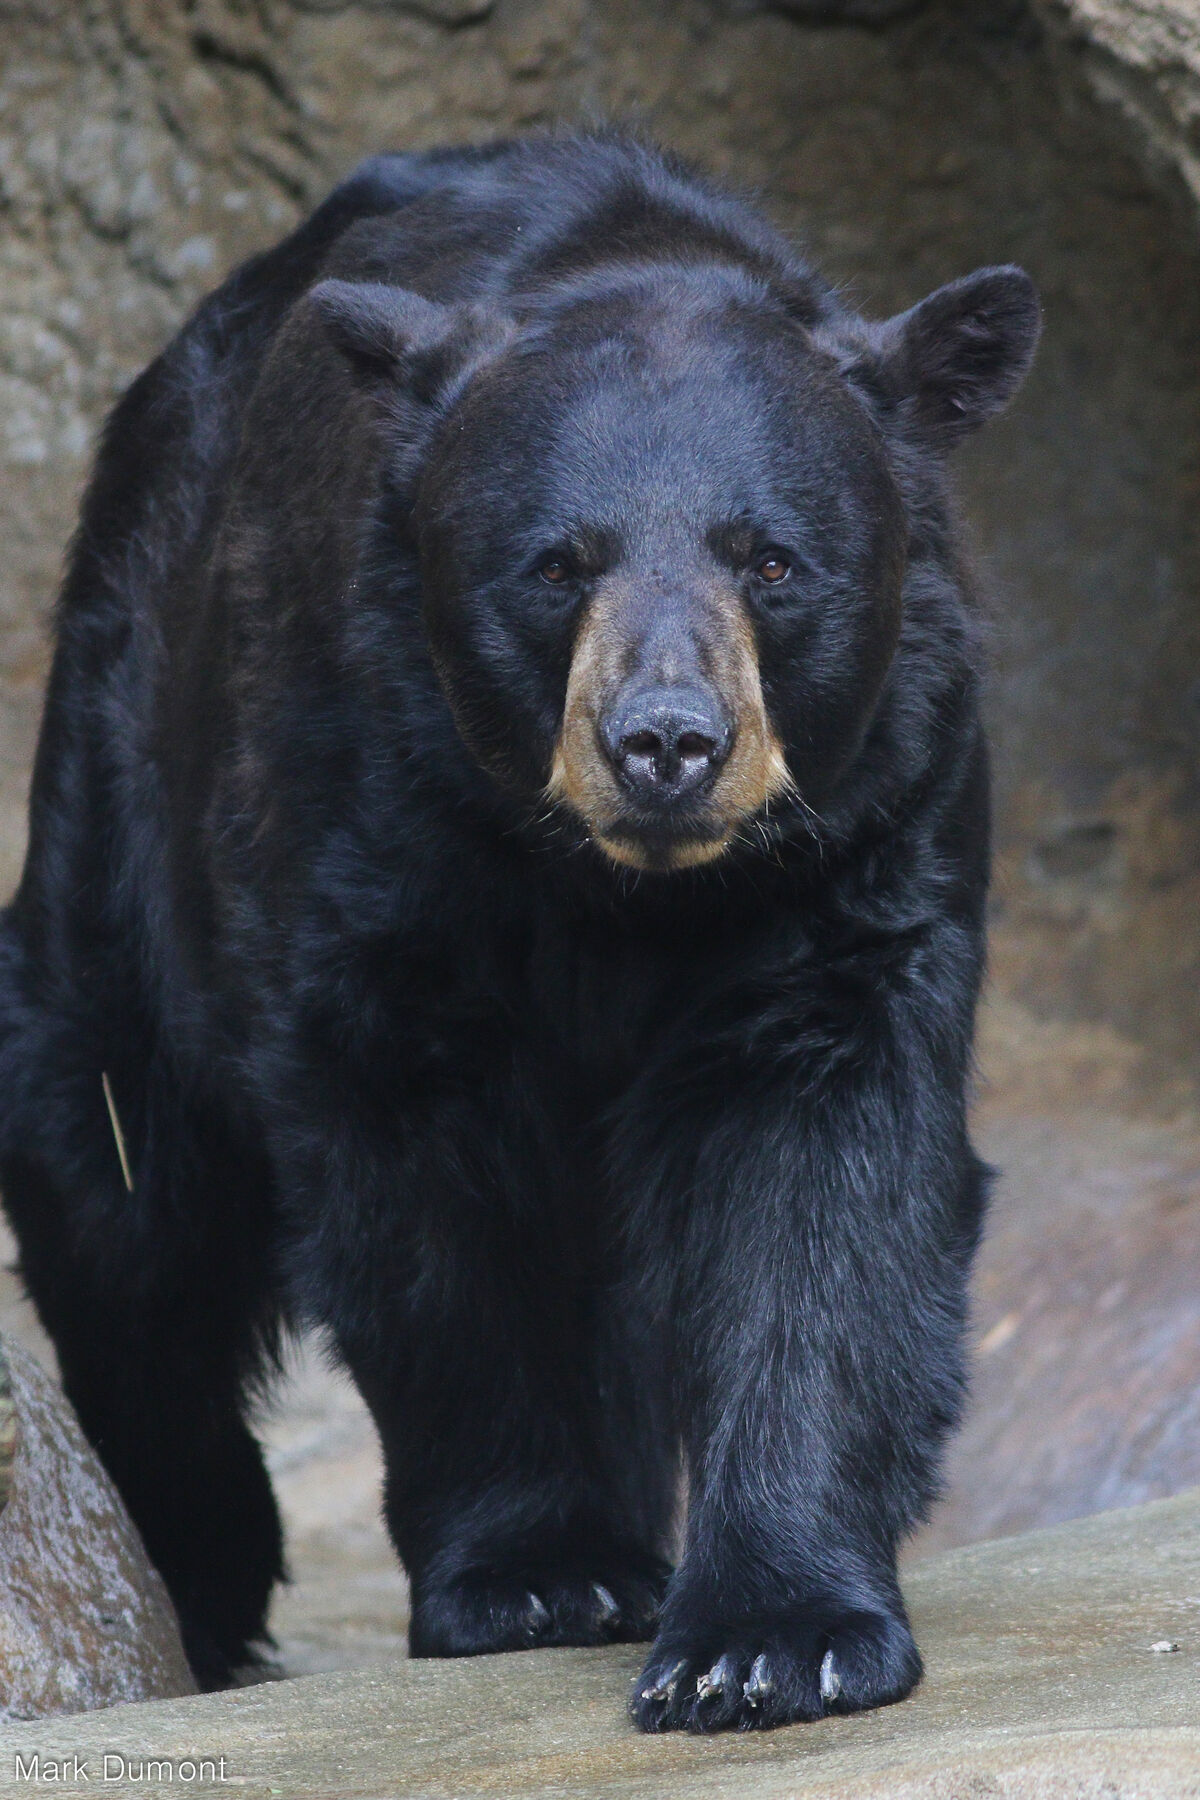 American black bear - Wikipedia